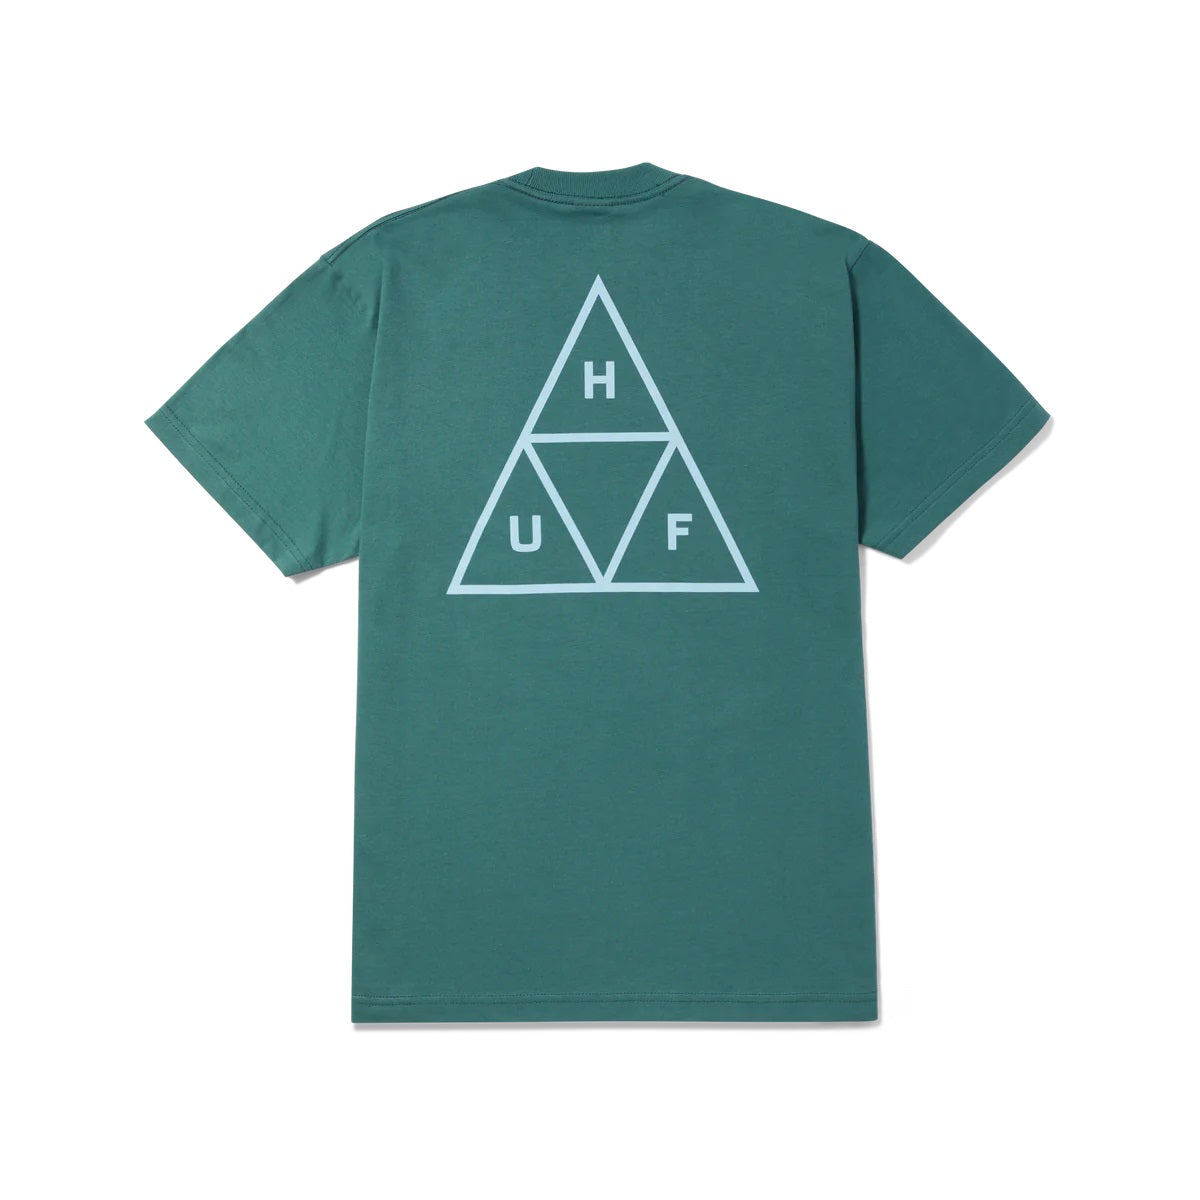 Huf Huf Set Triangle Tee Green T-Shirt